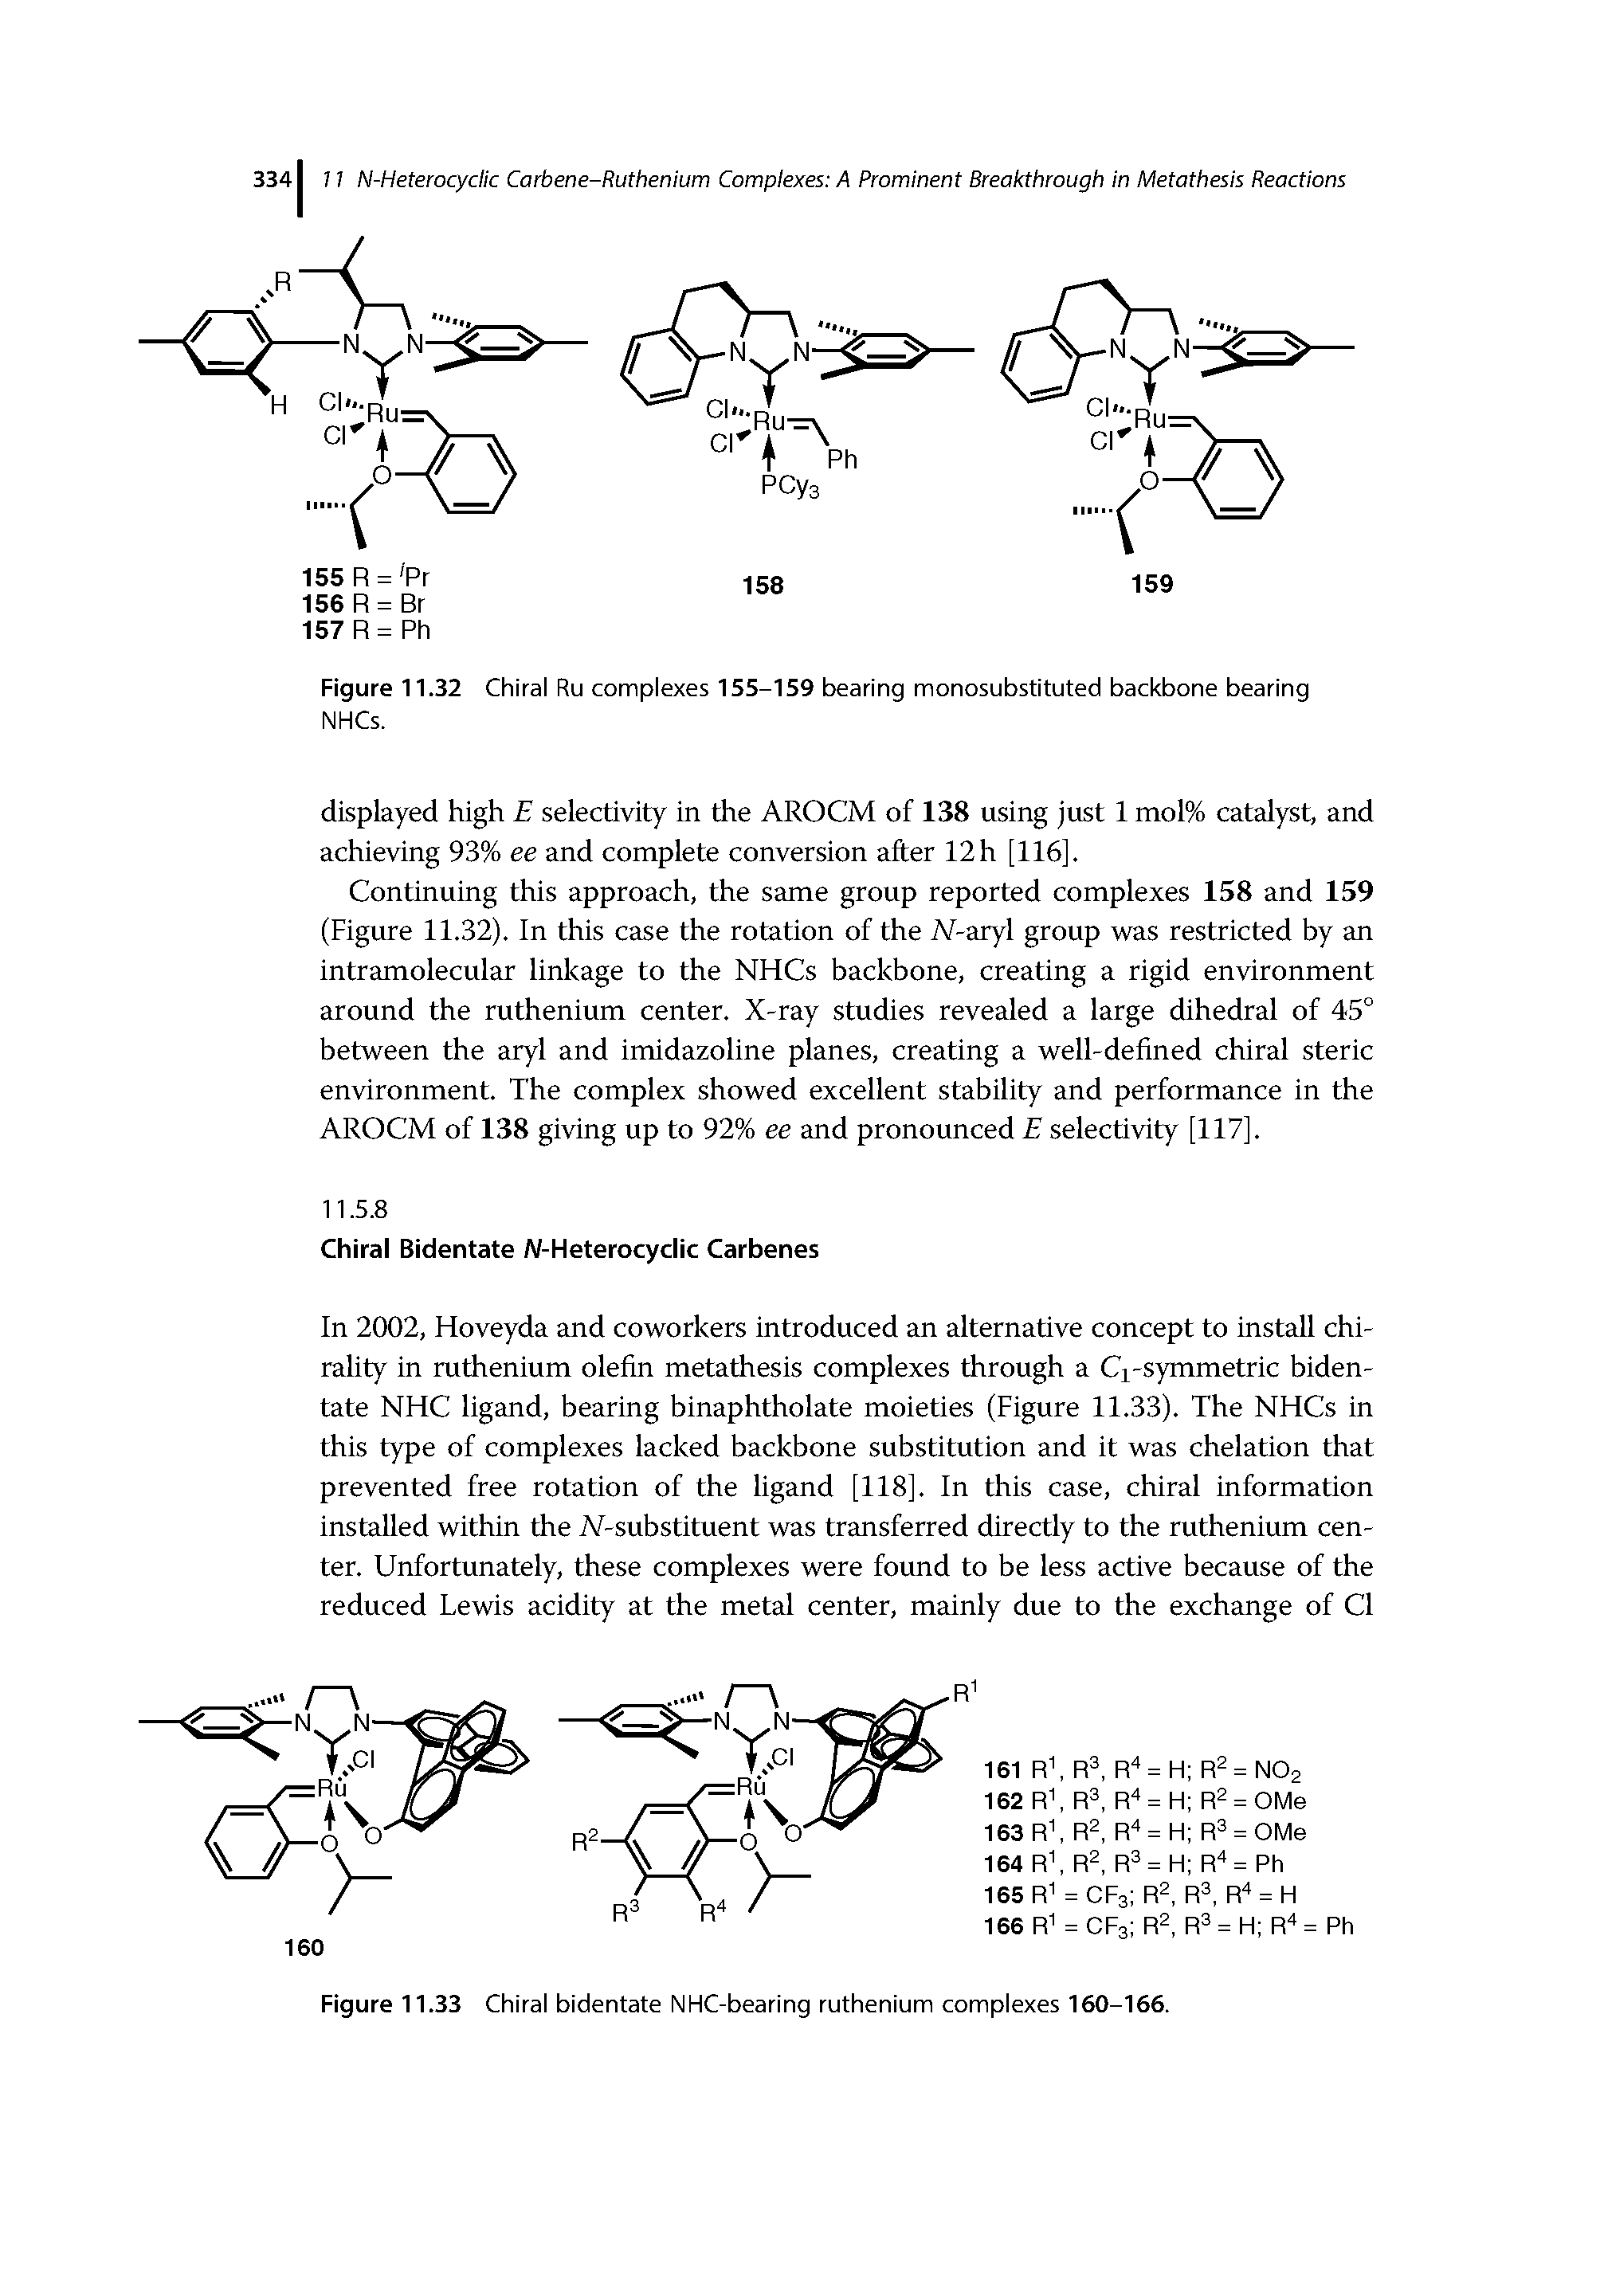 Figure 11.33 Chiral bidentate NHC-bearing ruthenium complexes 160-166.